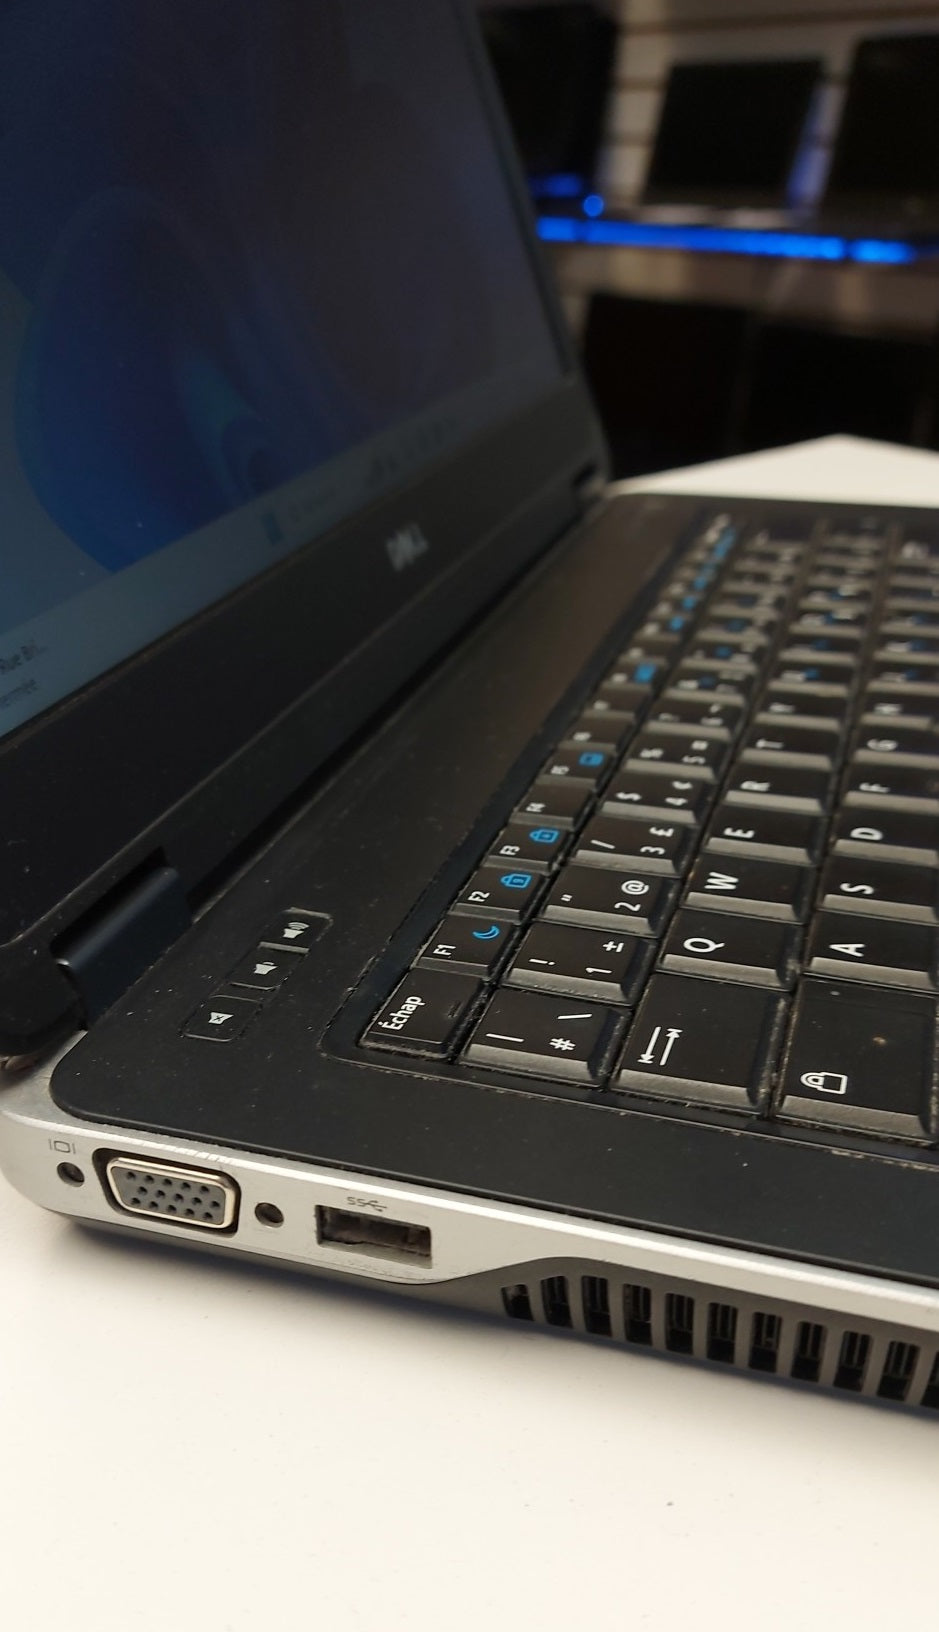 Laptop Dell Latitude E6440 i5-4310M 2,7ghz 8Go SSD 250Go DVD 15,6po HDMI garantie 6 mois + tx